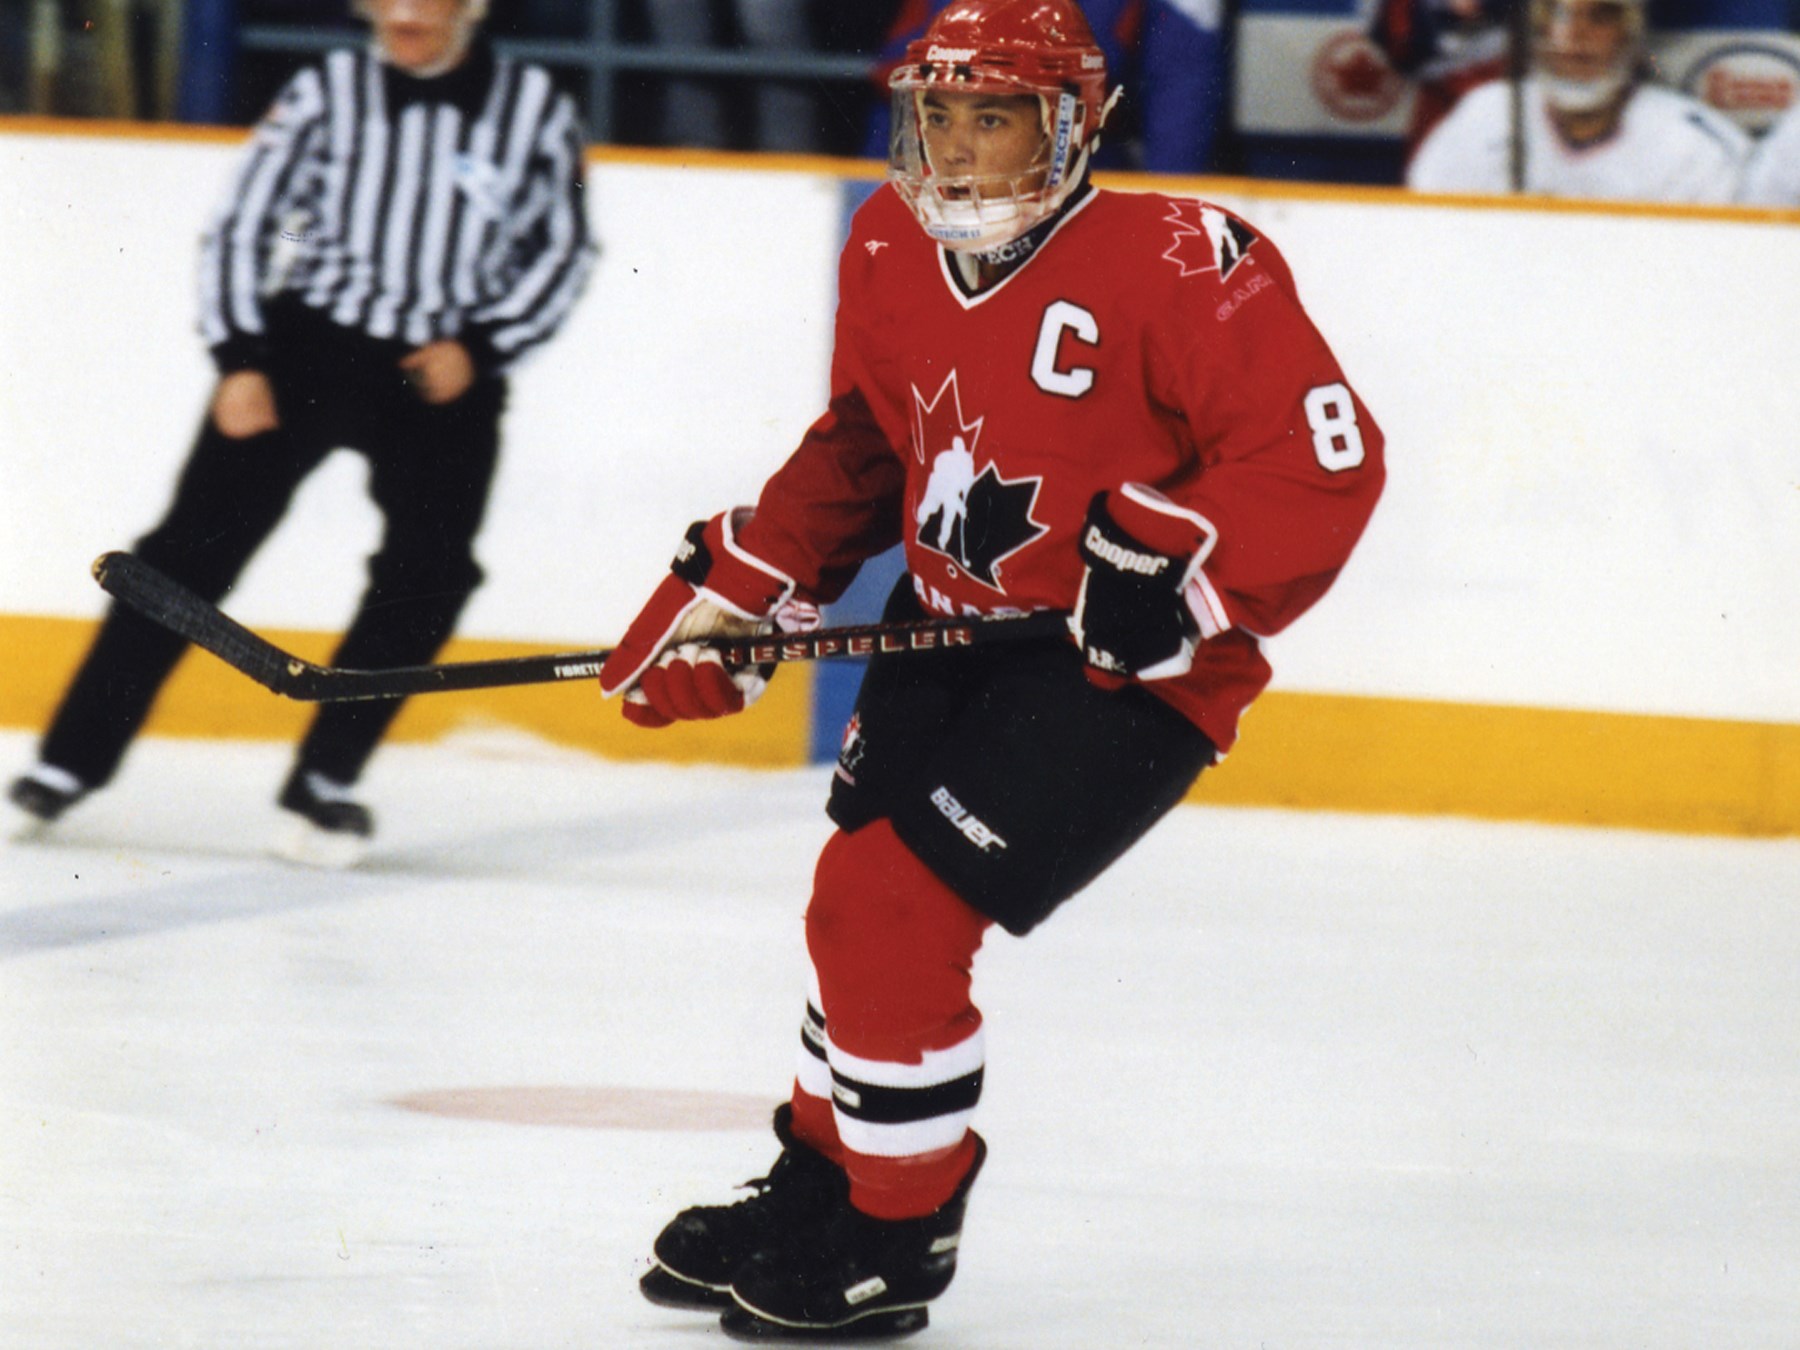 Seneca’s hockey superstar named to the Order of Canada